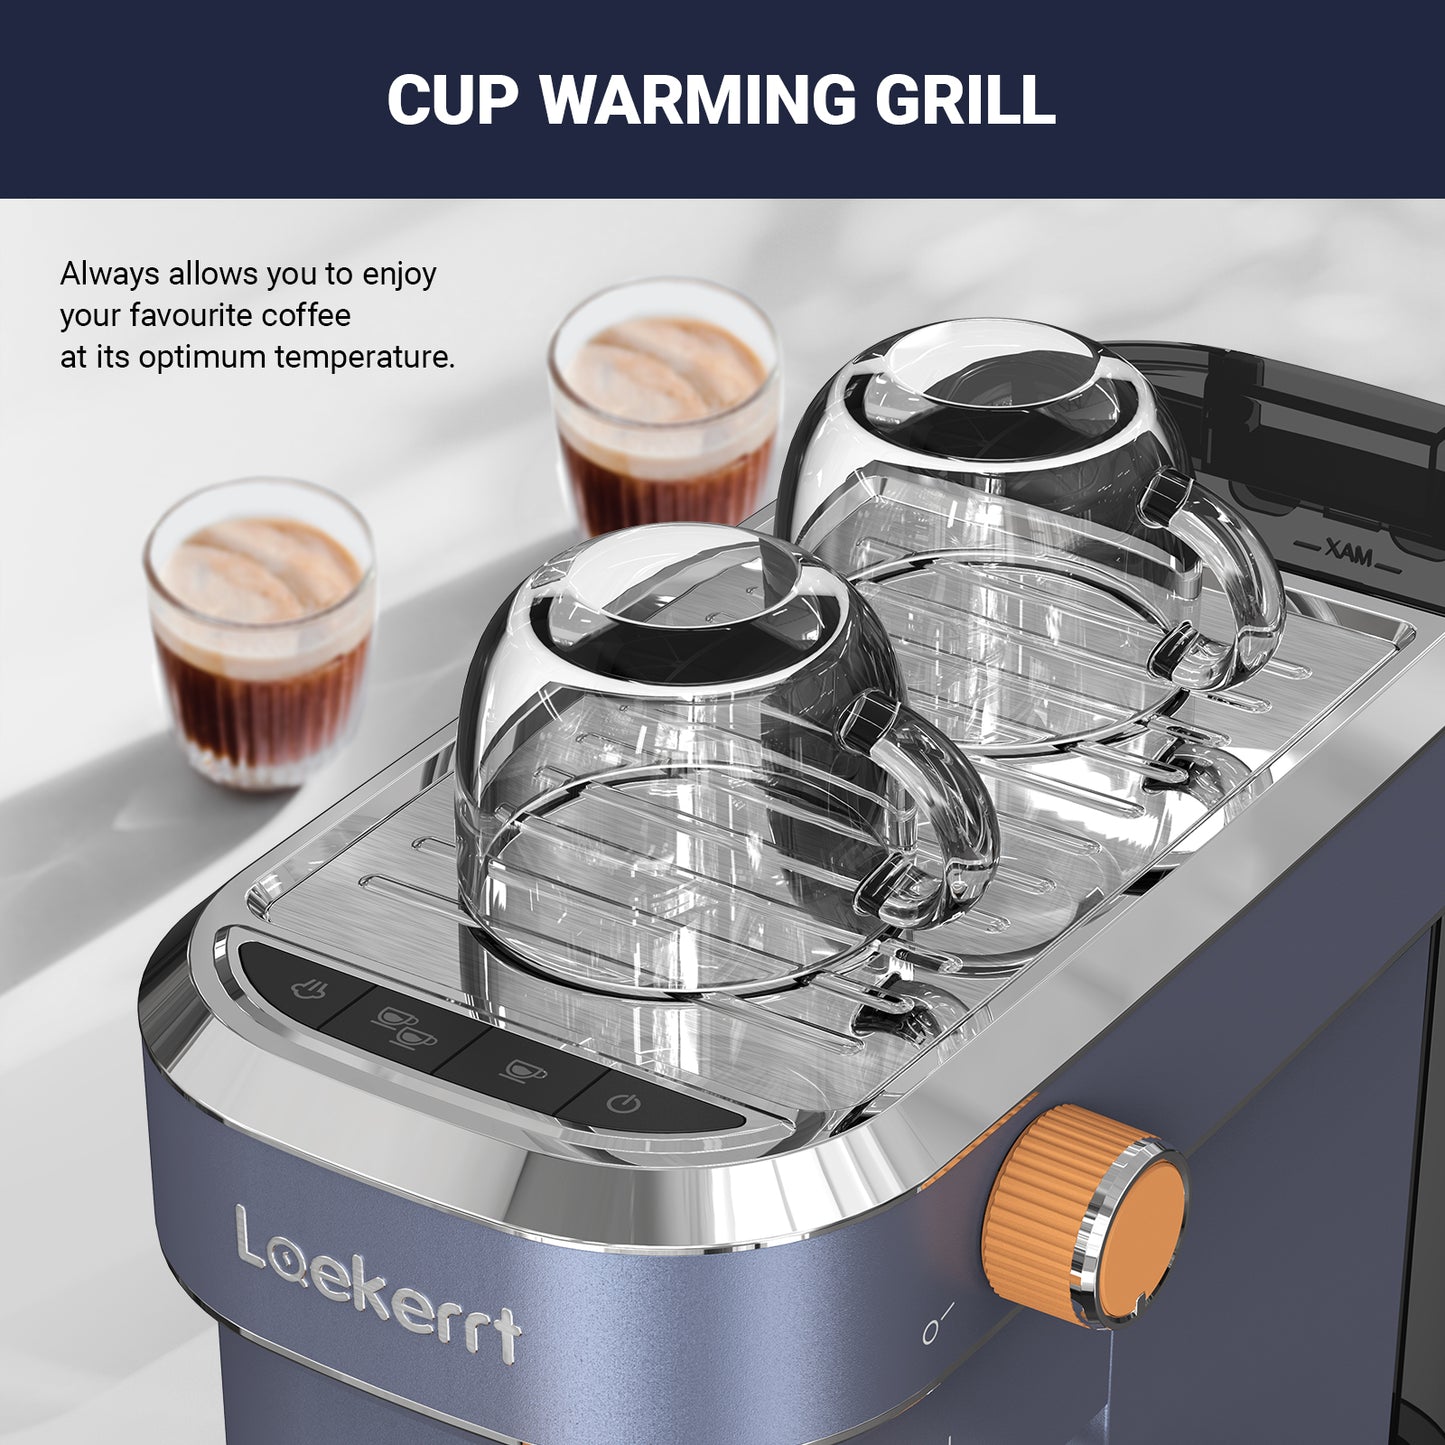 Espresso Machine Laekerrt 20 Bar CMEP01 Espresso Maker with Milk Frother Steam Wand, Professional Espresso Coffee Machine for Cappuccino and Latte (Navy Blue)